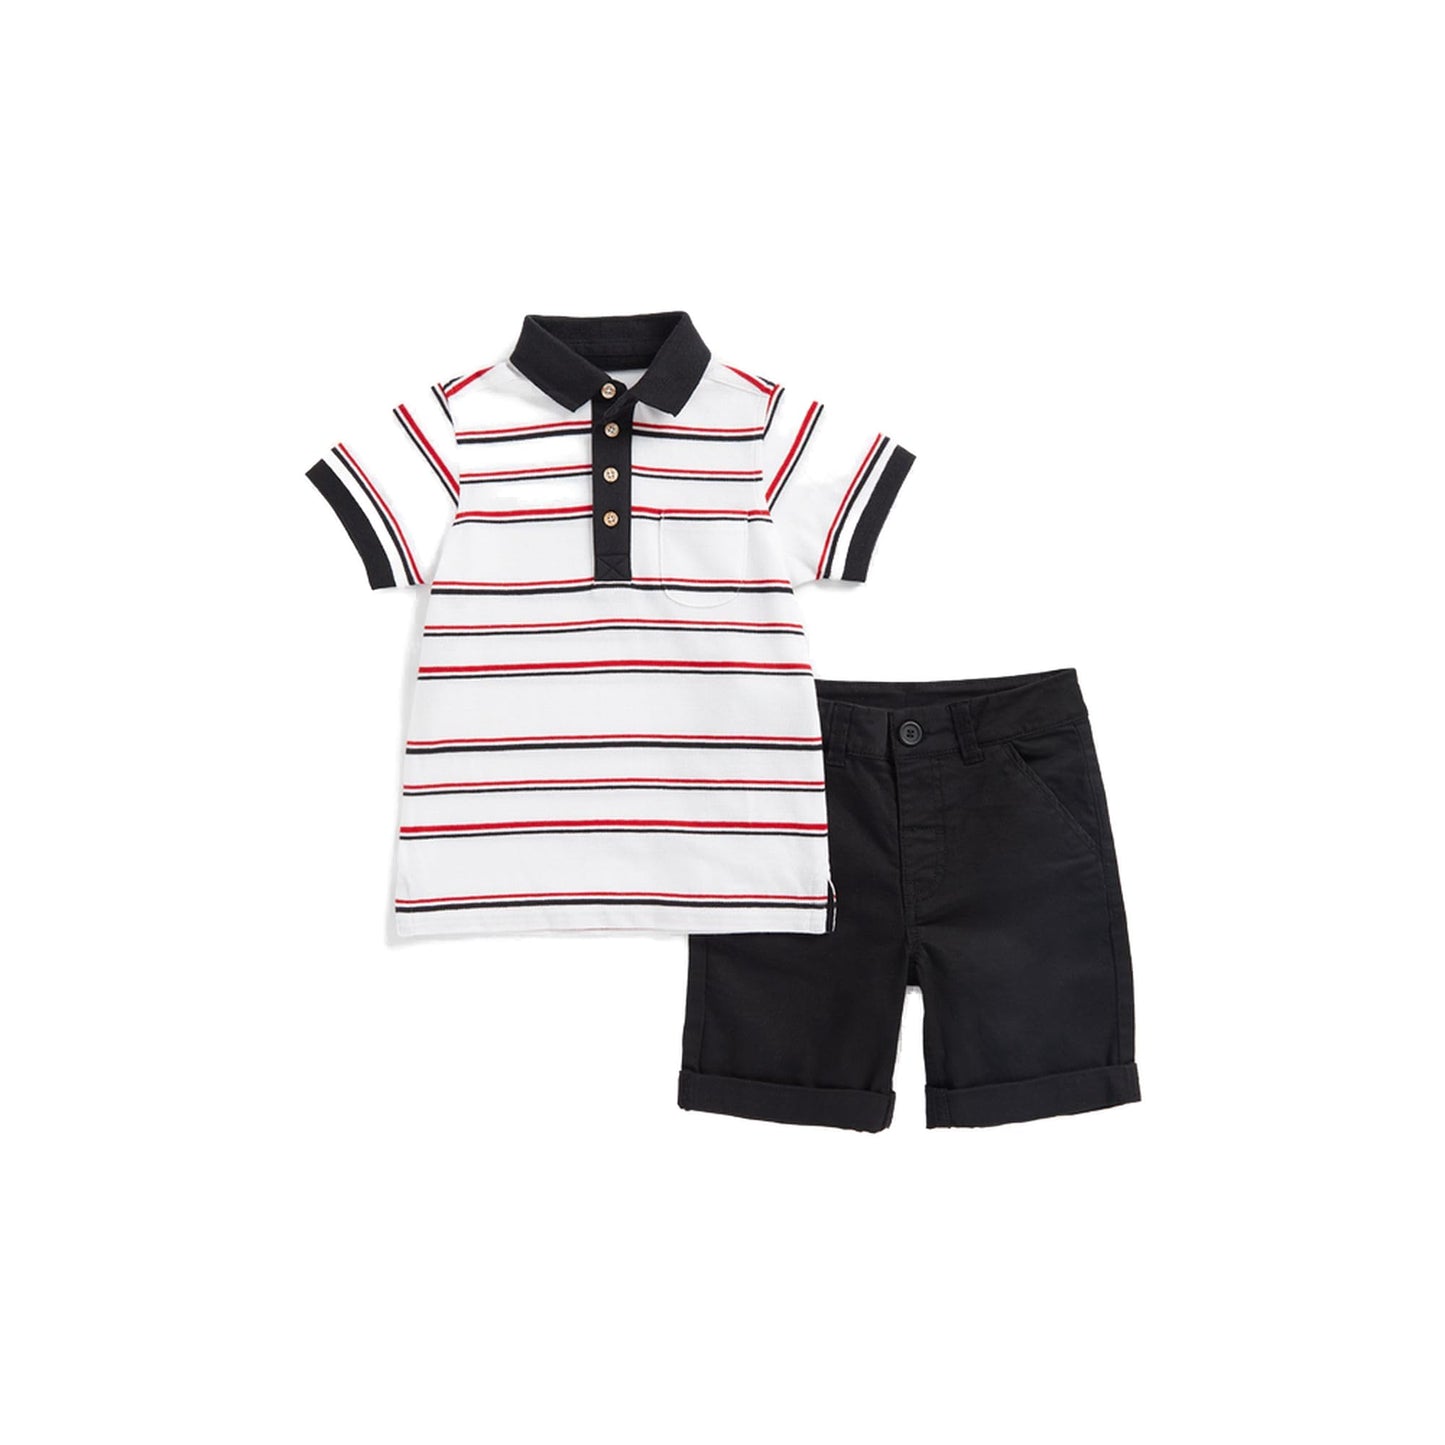 Mothercare Boys EC903 Jb Rr Stripe Polo & Black Short Set (7-8 Years)